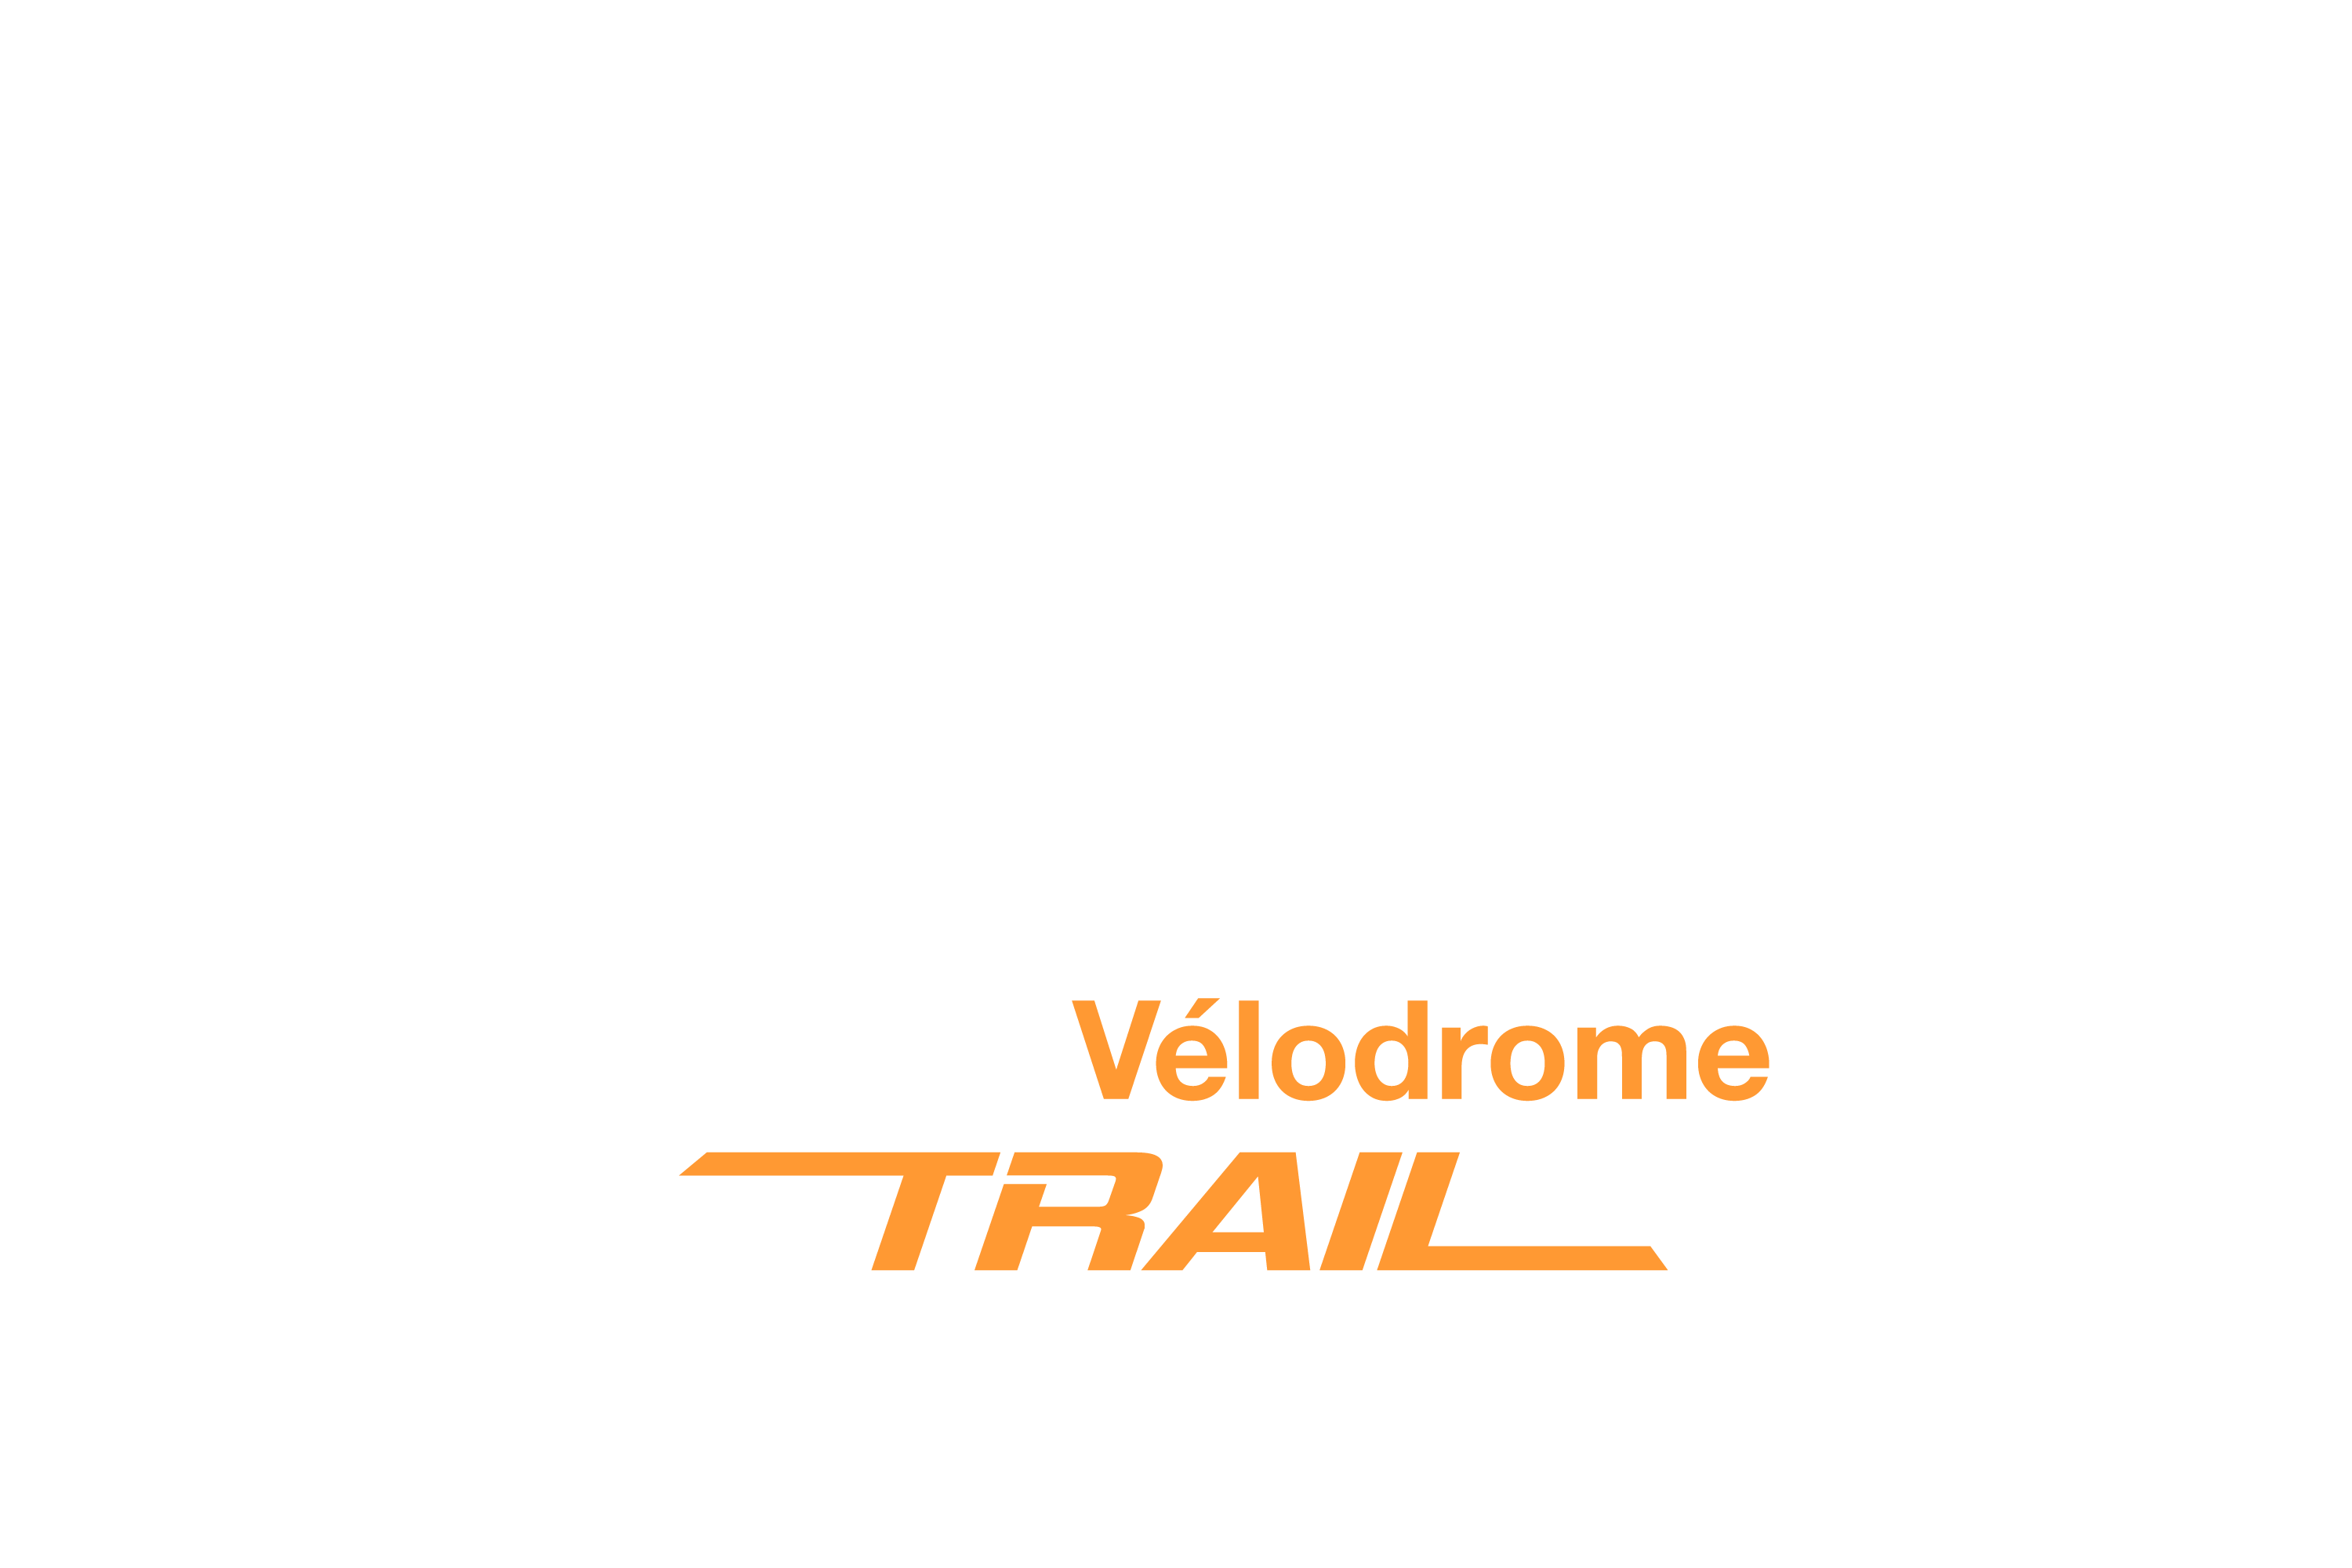 Orange Vélodrome Trail